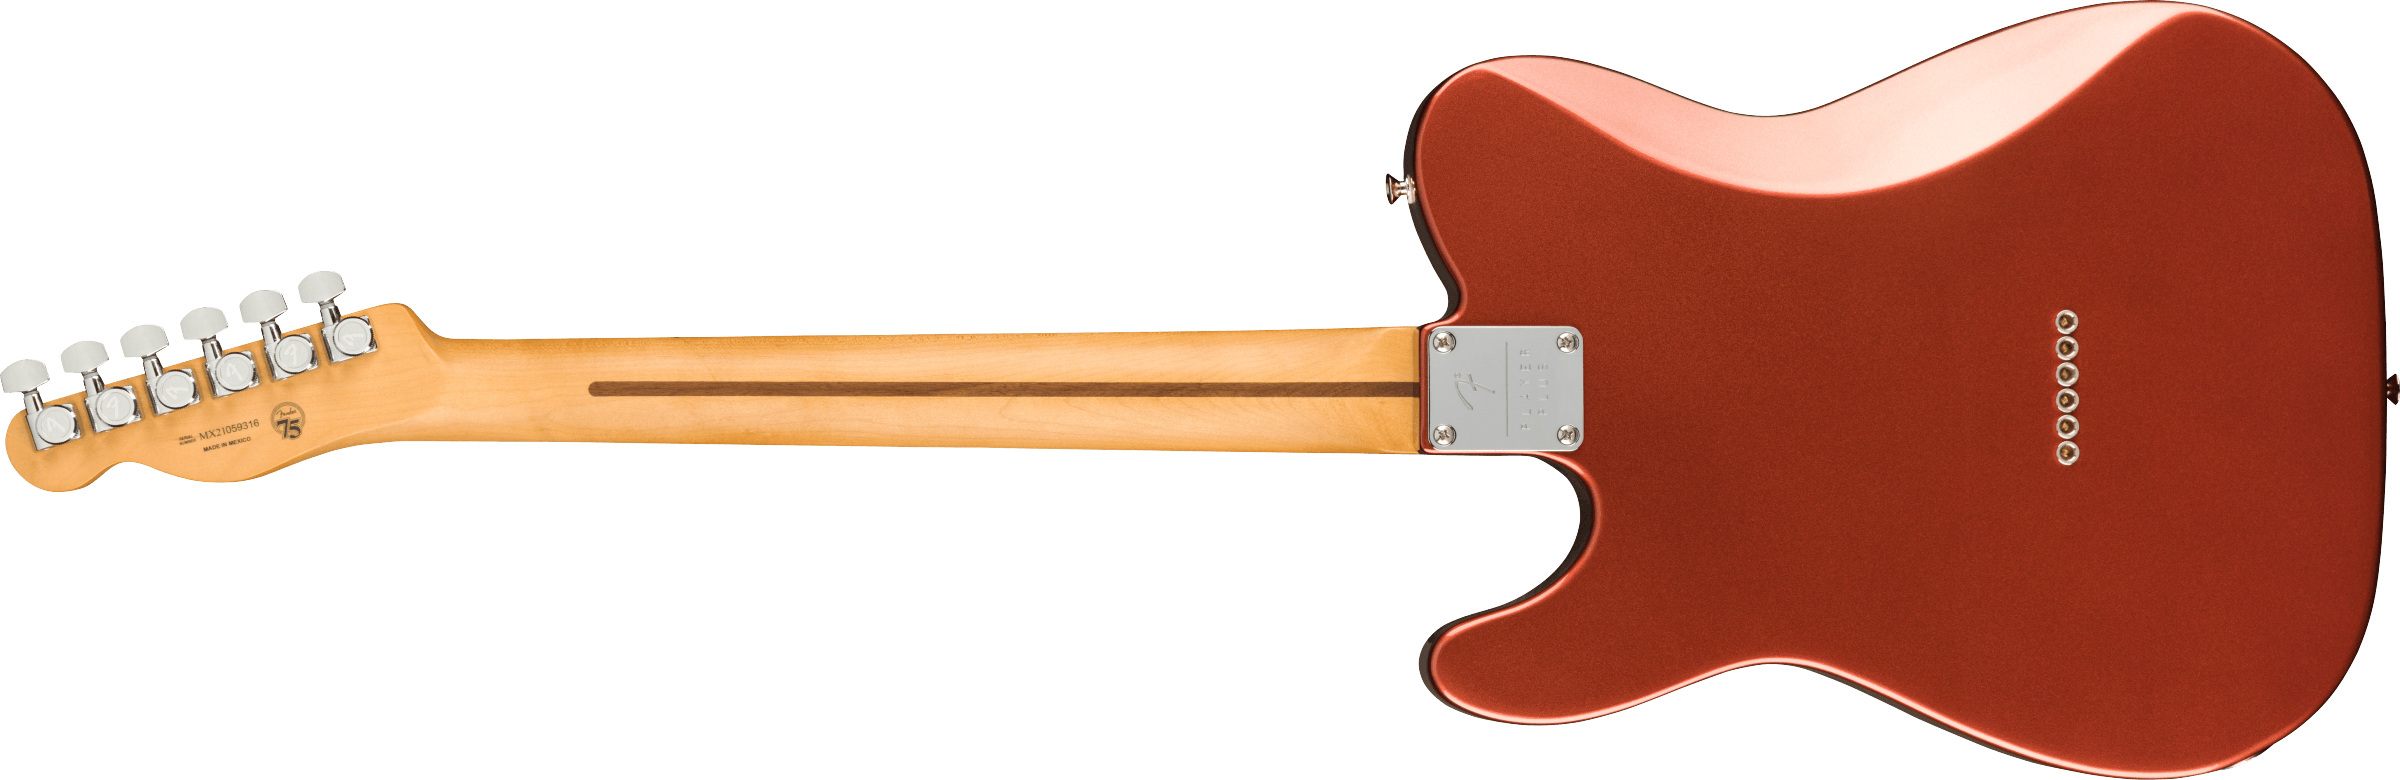 Fender Tele Player Plus Mex 2s Ht Mn - Aged Candy Apple Red - Guitarra eléctrica con forma de tel - Variation 1